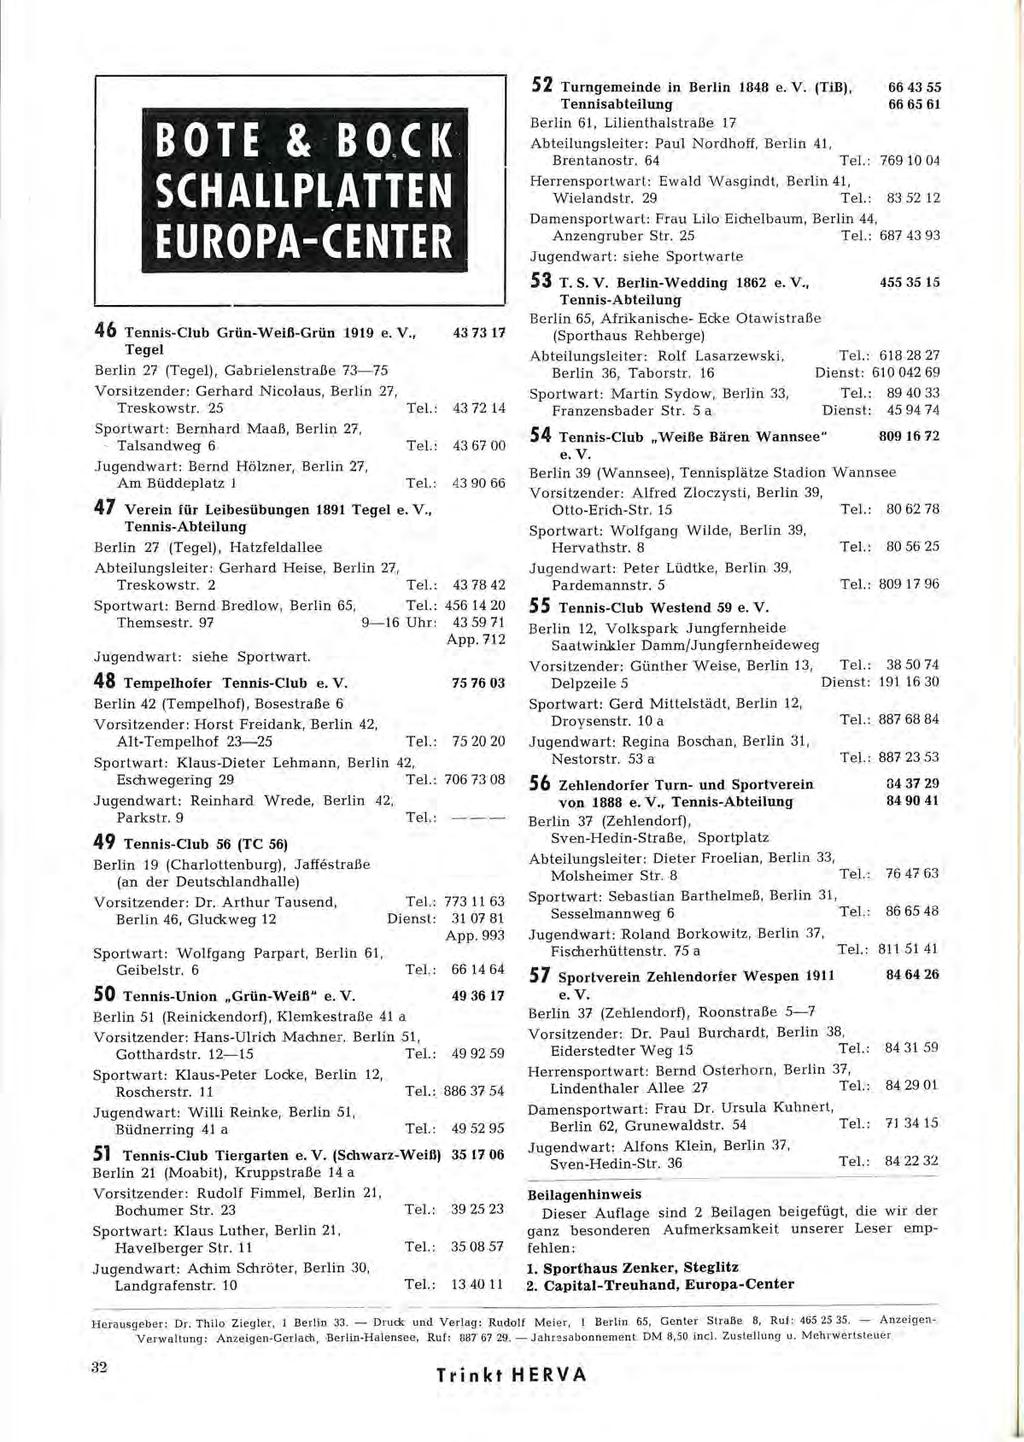 46 Tennis-Club Grün-Weiß-Grün 1919 e. V., 43 73 17 Tegel Berlin 27 (Tegel), Gabrielenstraße 73-75 Vorsitzender: Gerhard Nicolaus, Berlin 27, Treskowstr. 25 Tel.